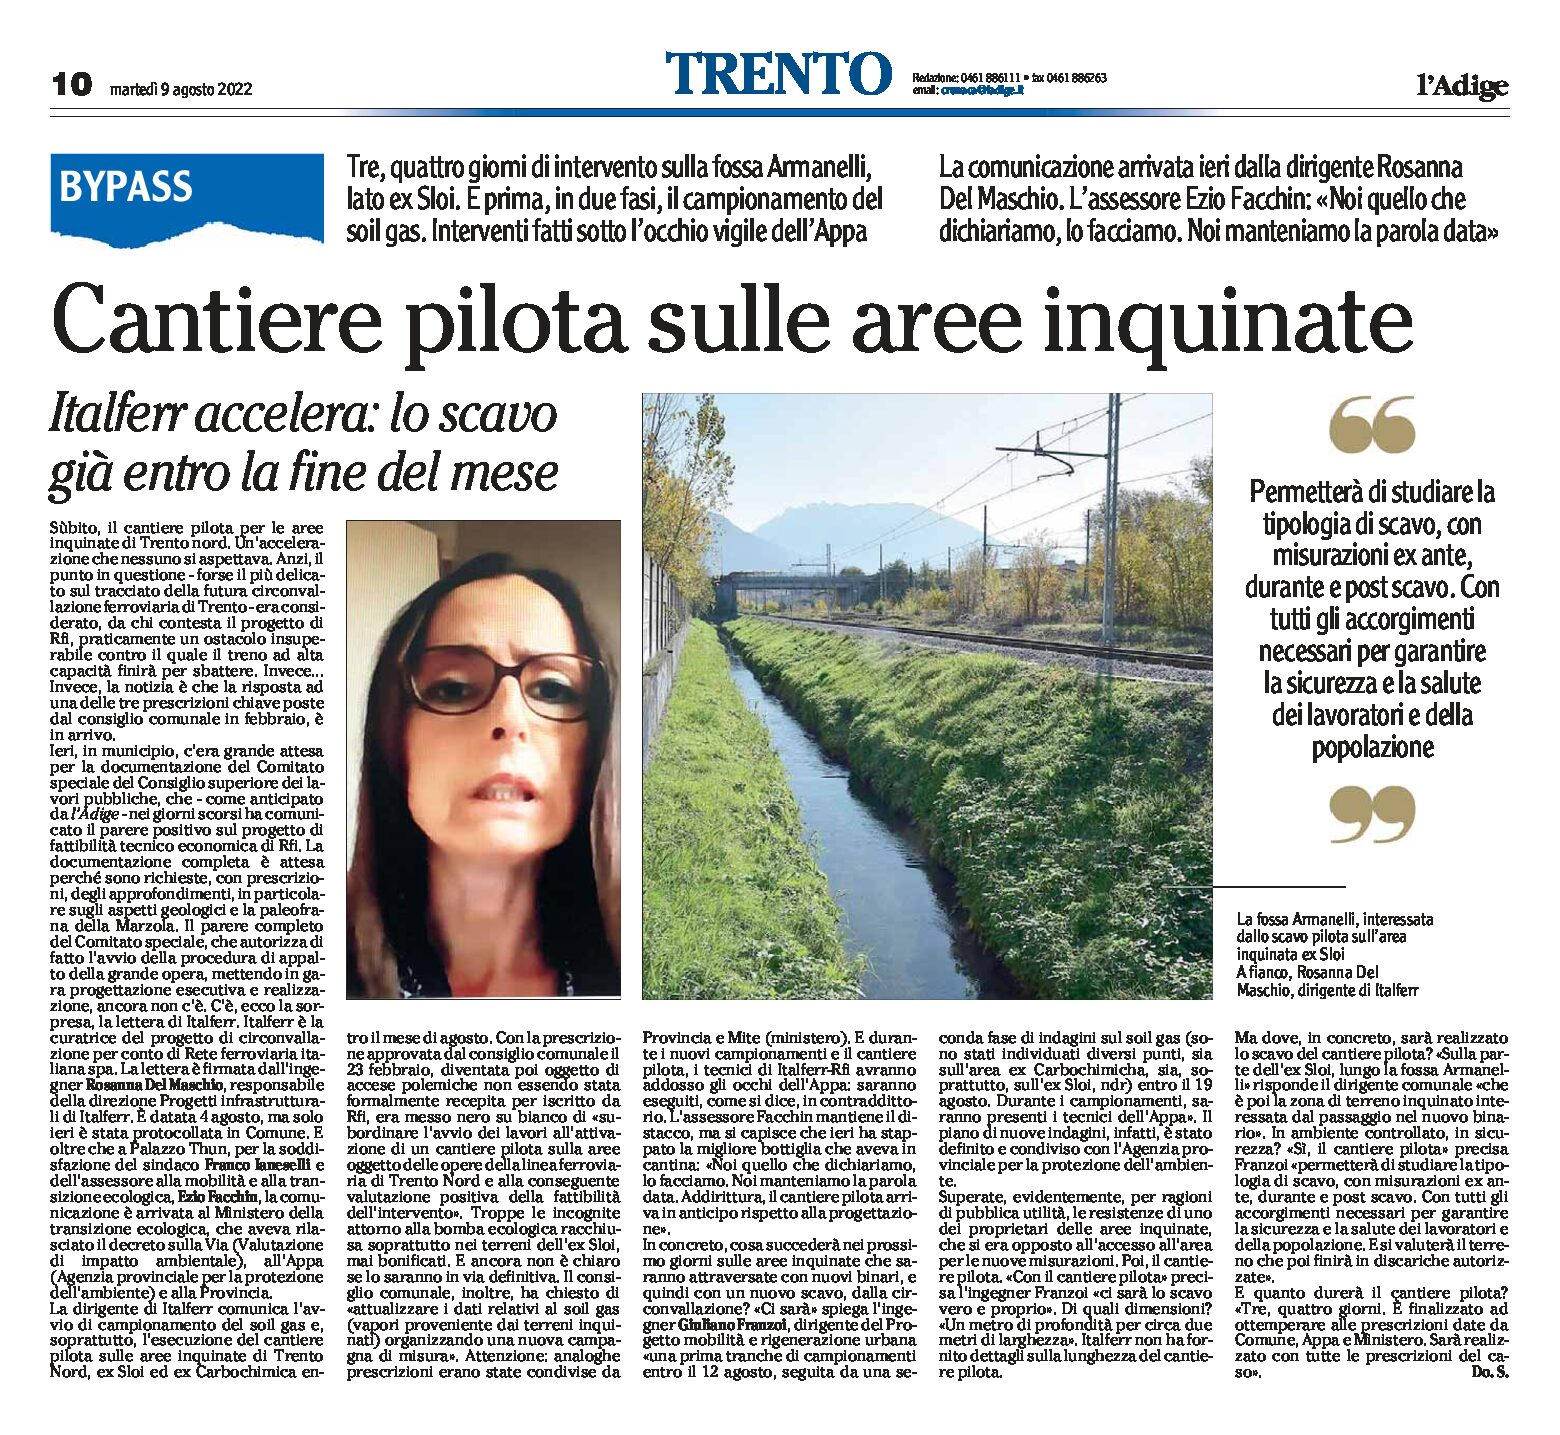 Trento, bypass: cantiere pilota sulle aree inquinate, scavo già entro fine mese